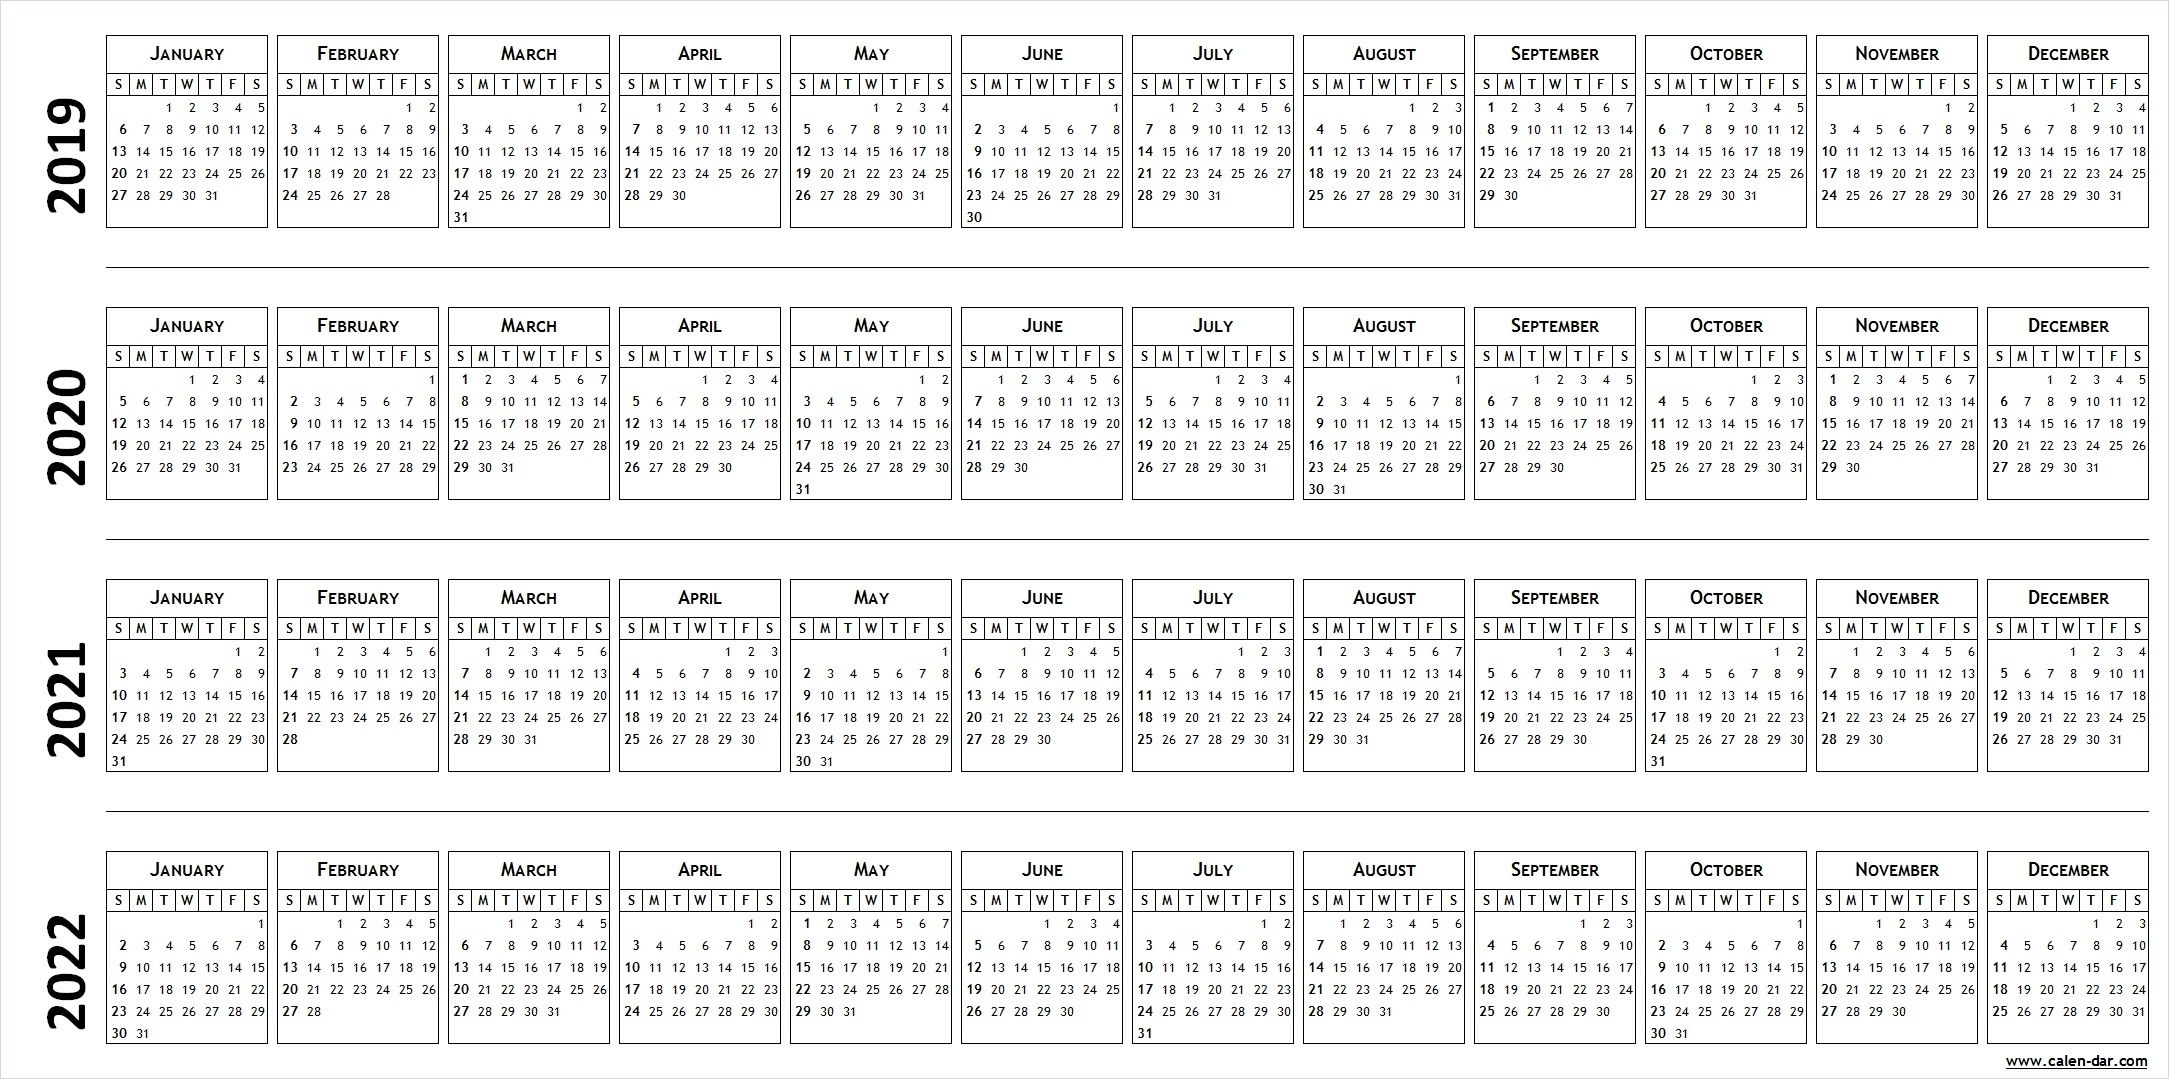 Blank Template For Calendar 2019 2020 2021 2022 | Excel regarding 2019 2022 Year Calendar Printable